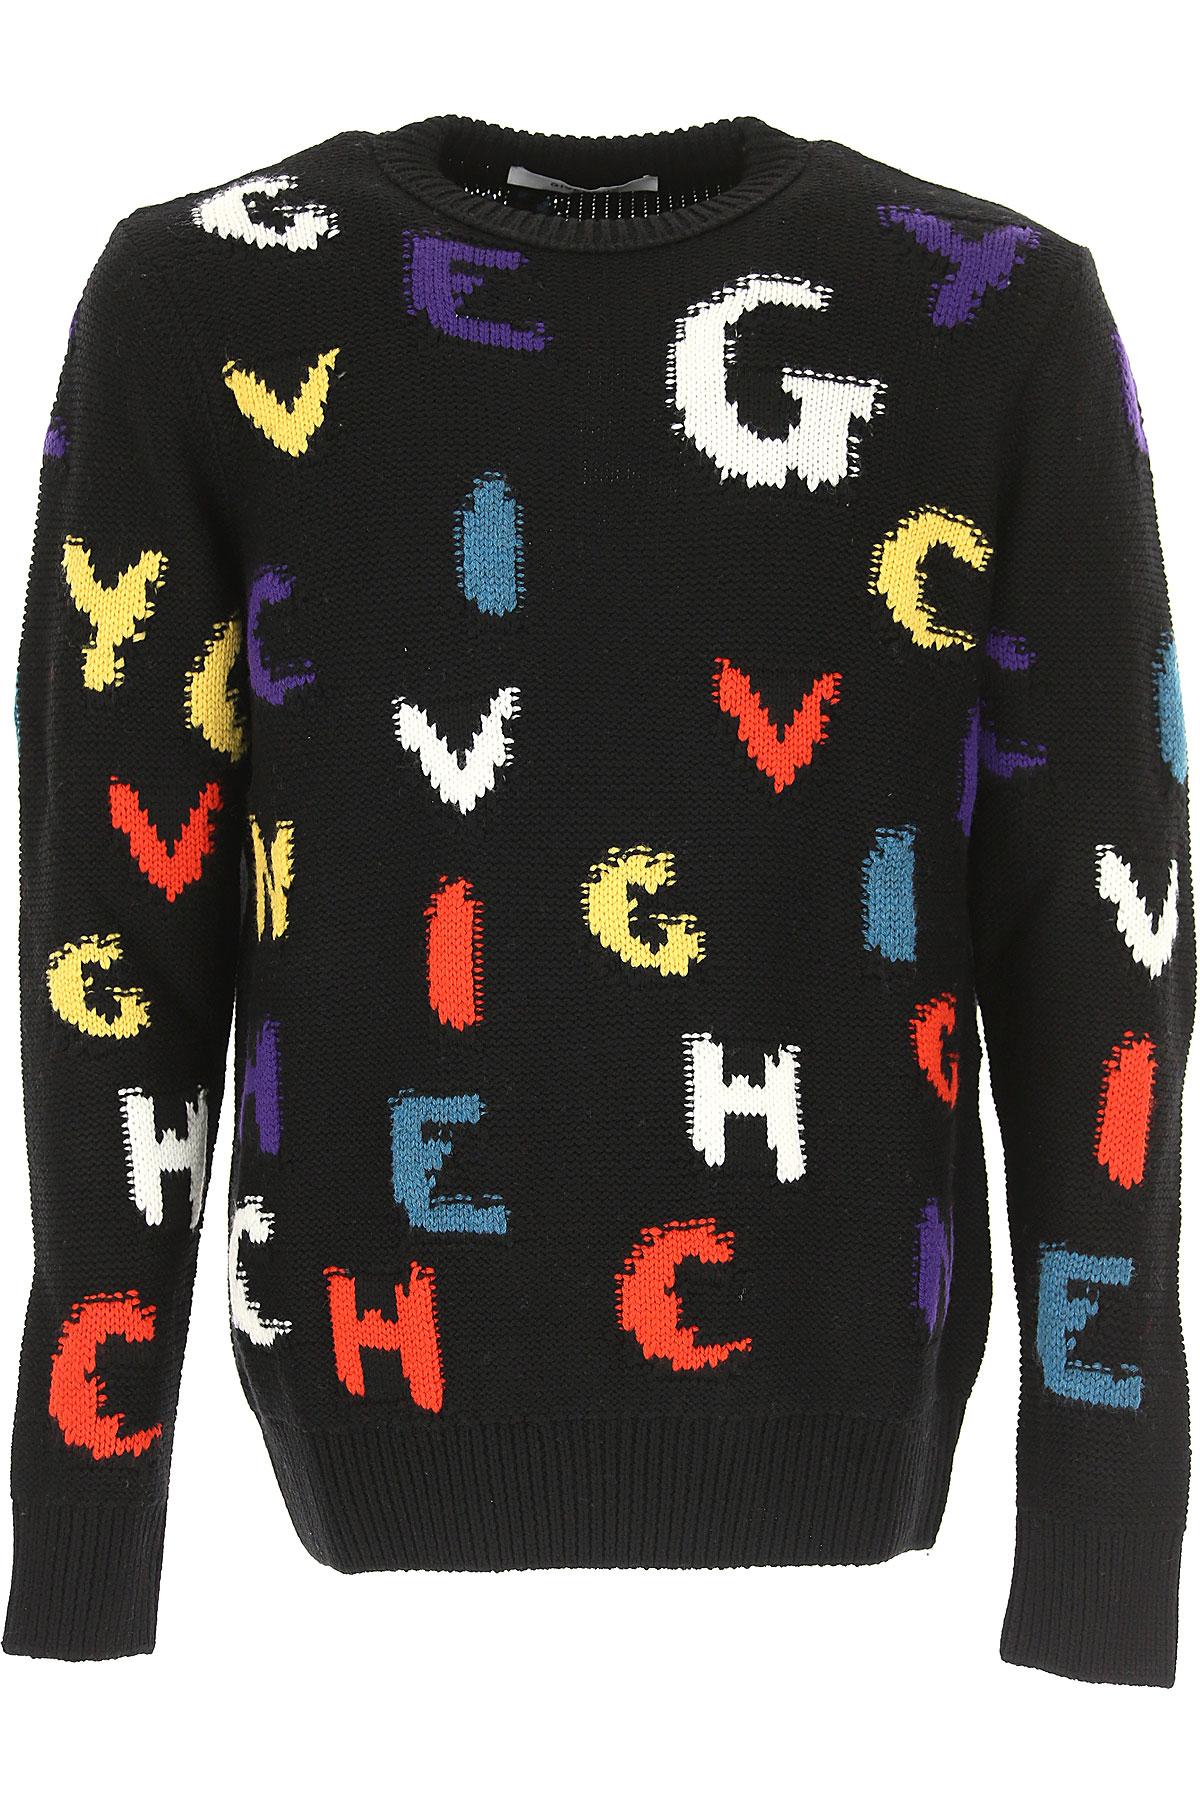 Givenchy Sweater For Men Jumper On Sale in Black for Men - Lyst